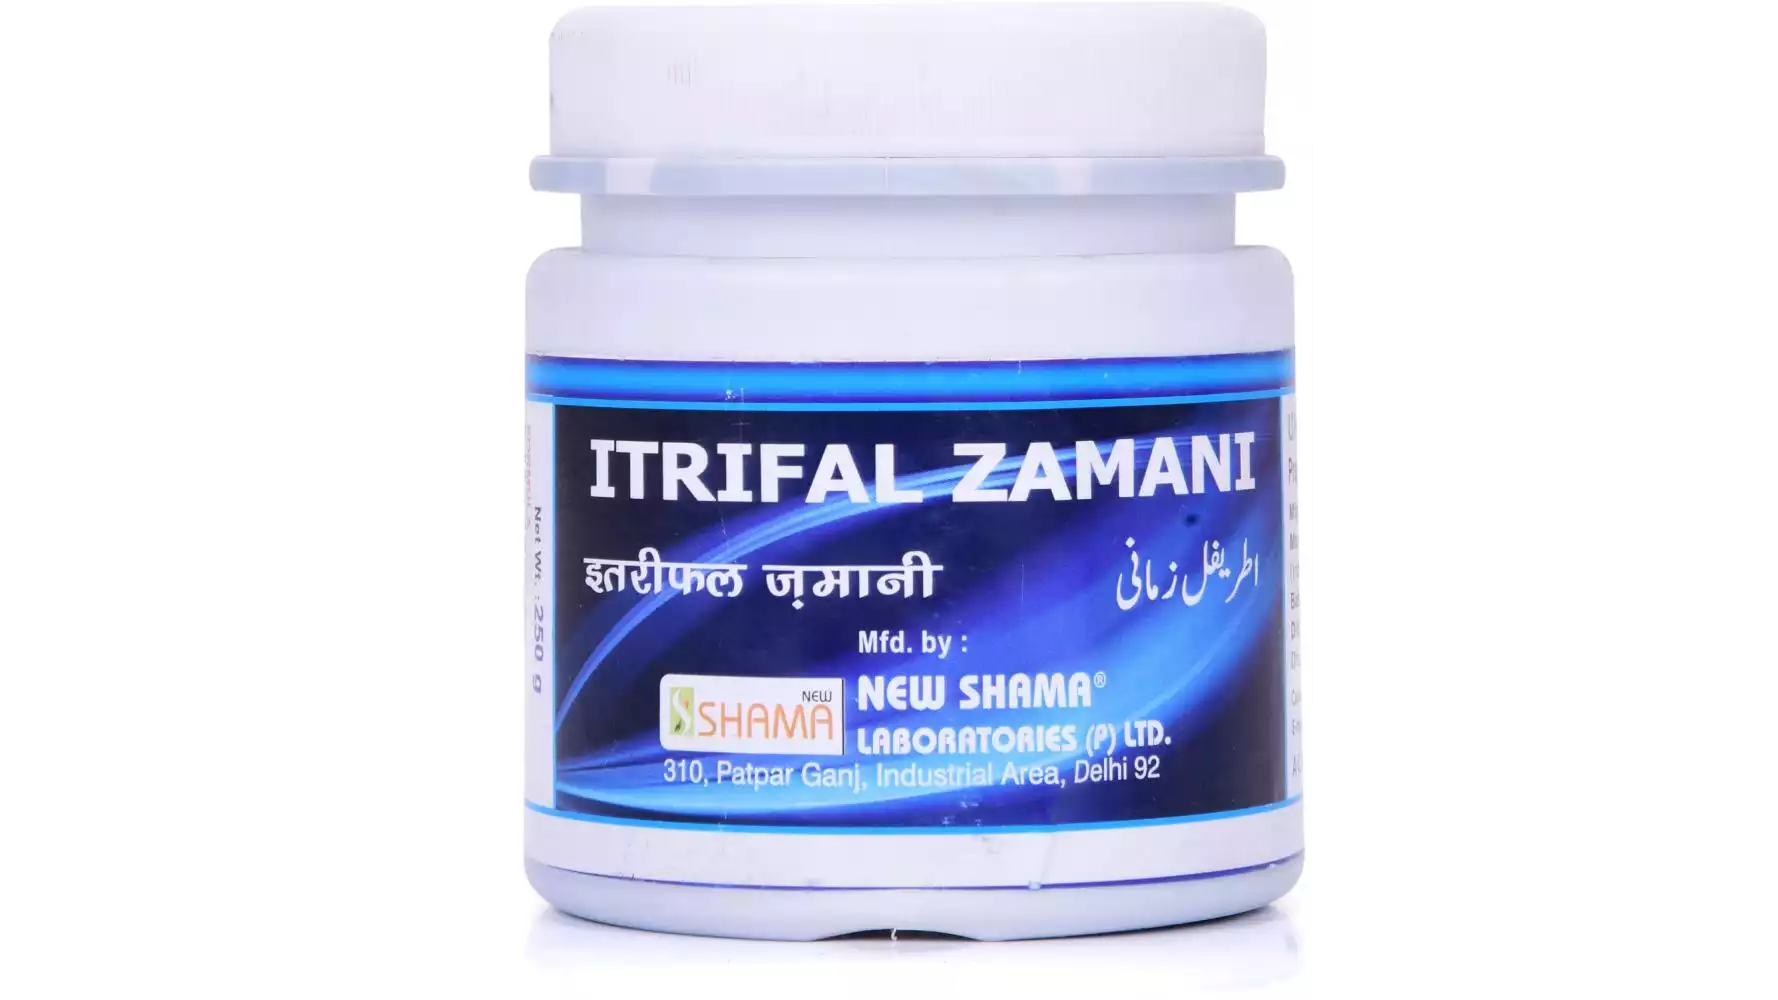 New Shama Itrifal Zamani (125g)